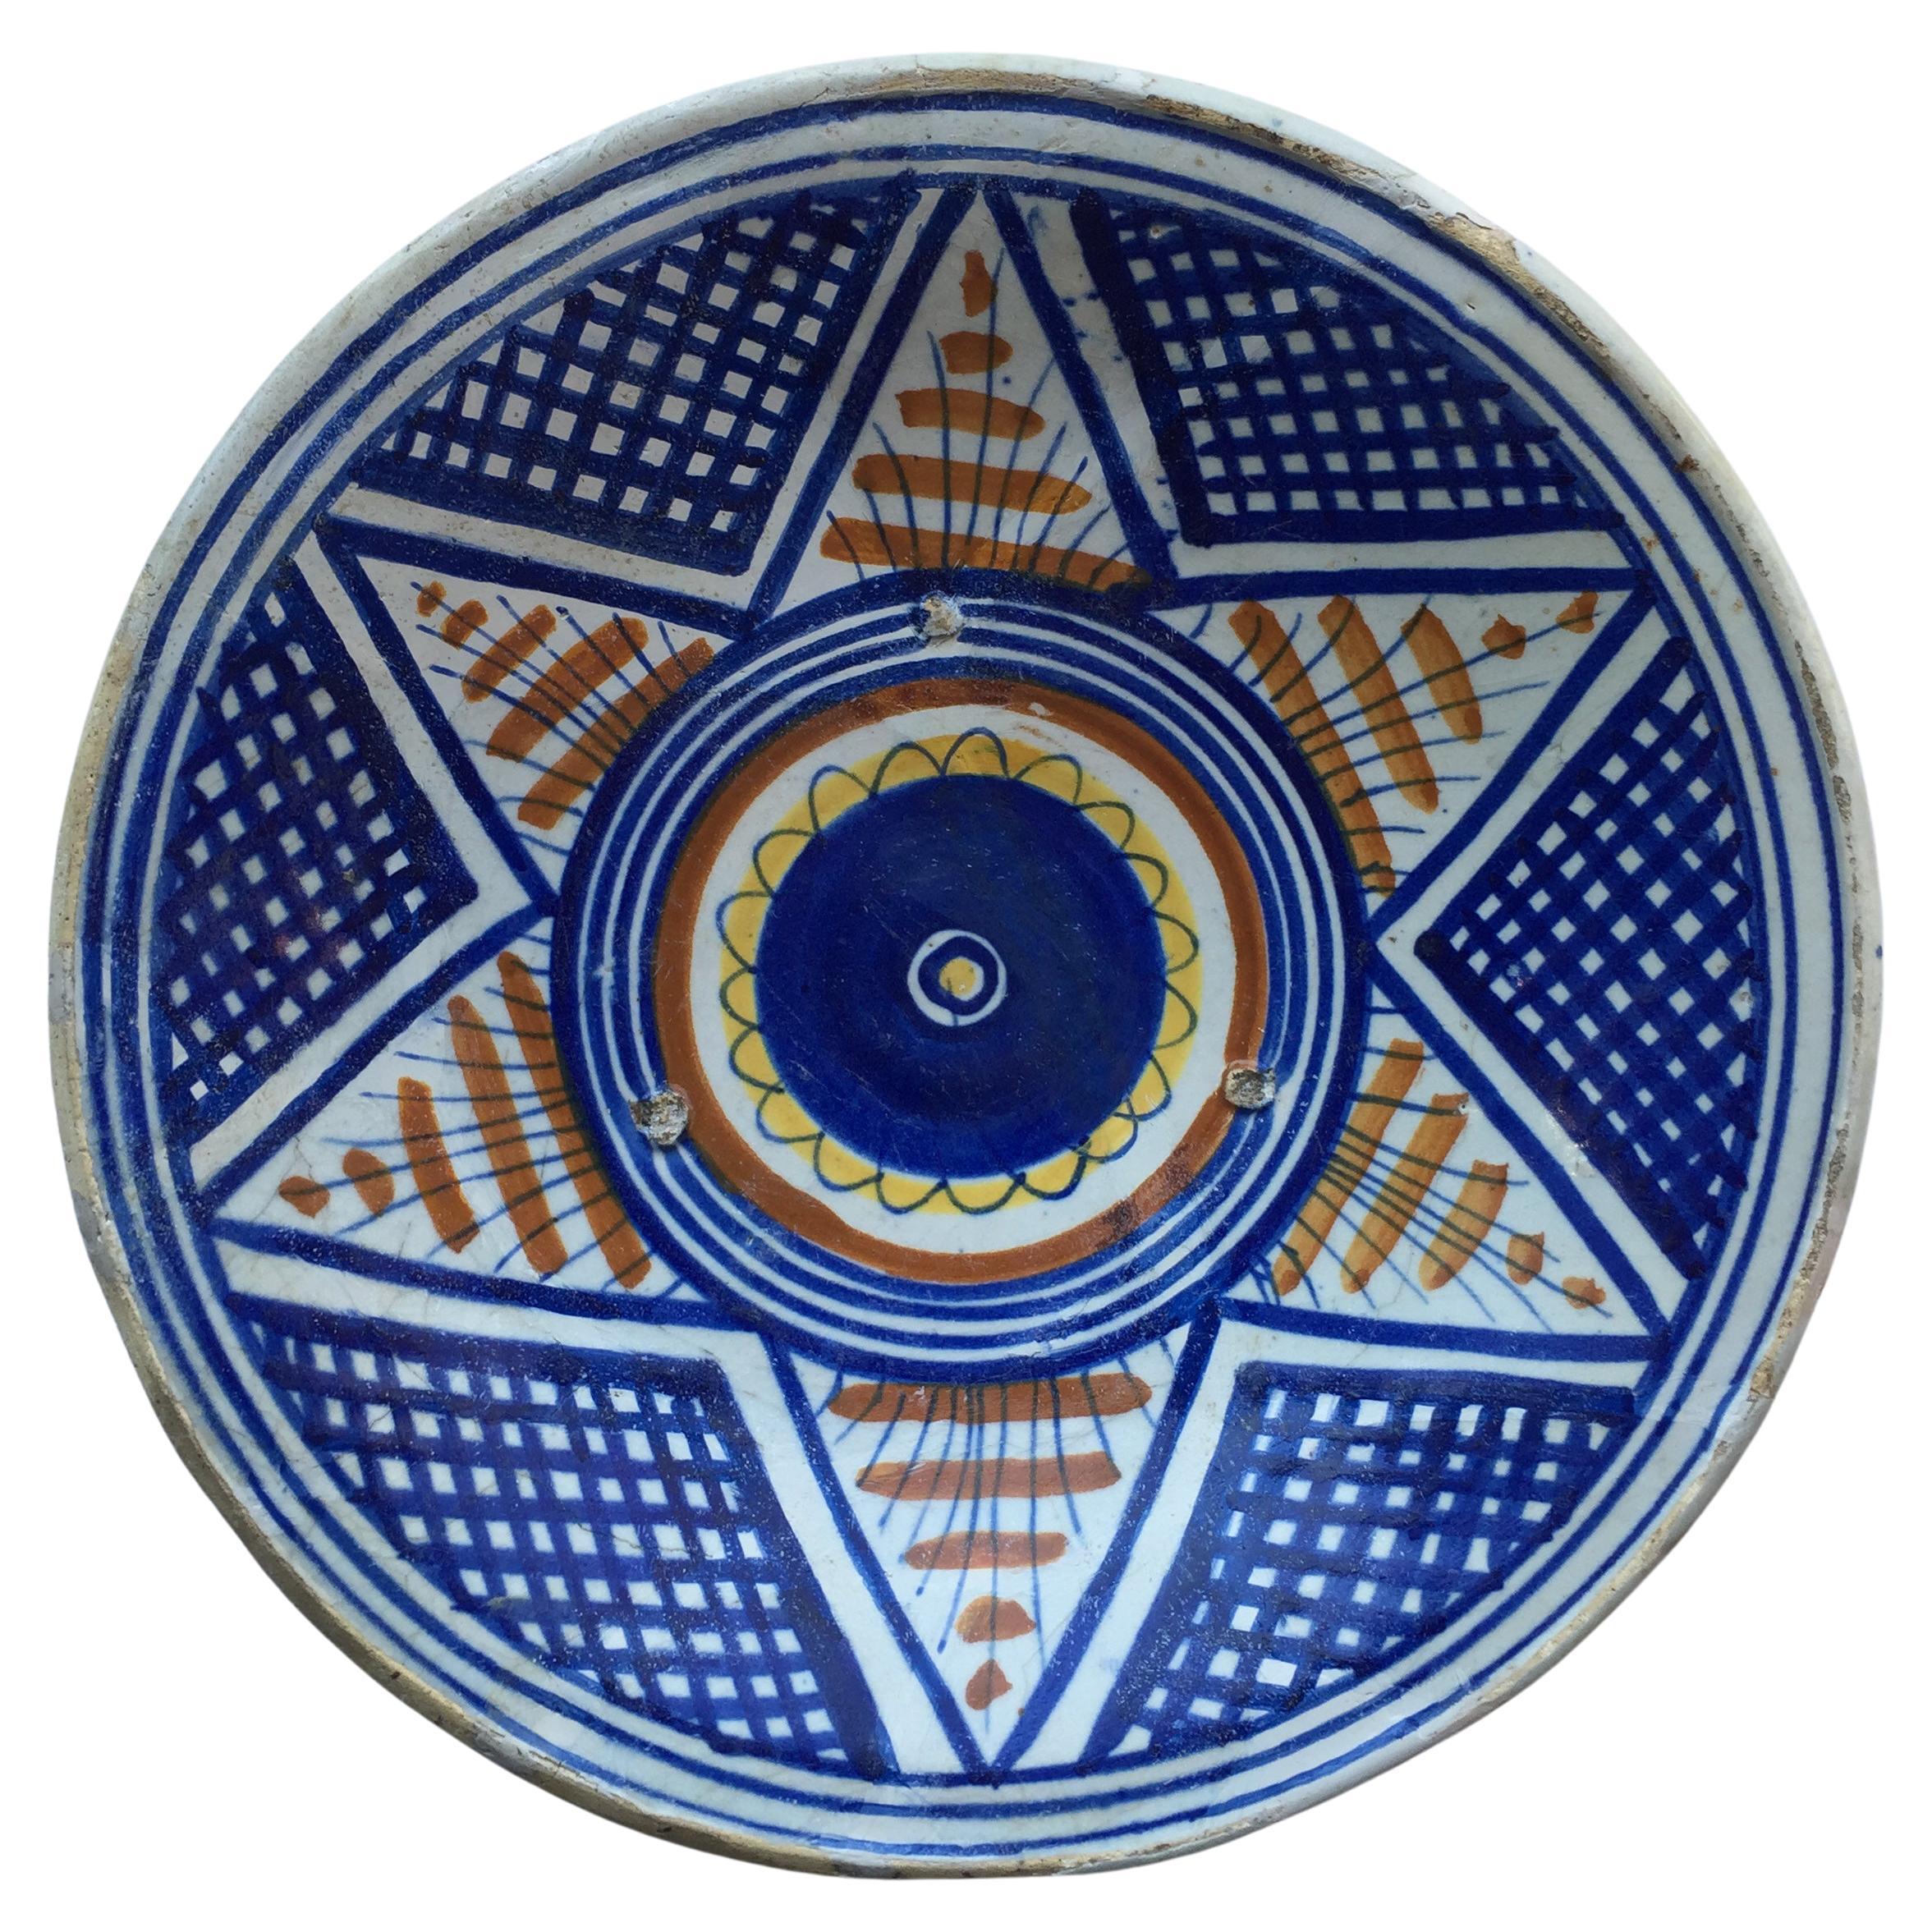 Rare Dutch Majolica Plate with Star Design, Second Half 16th Century